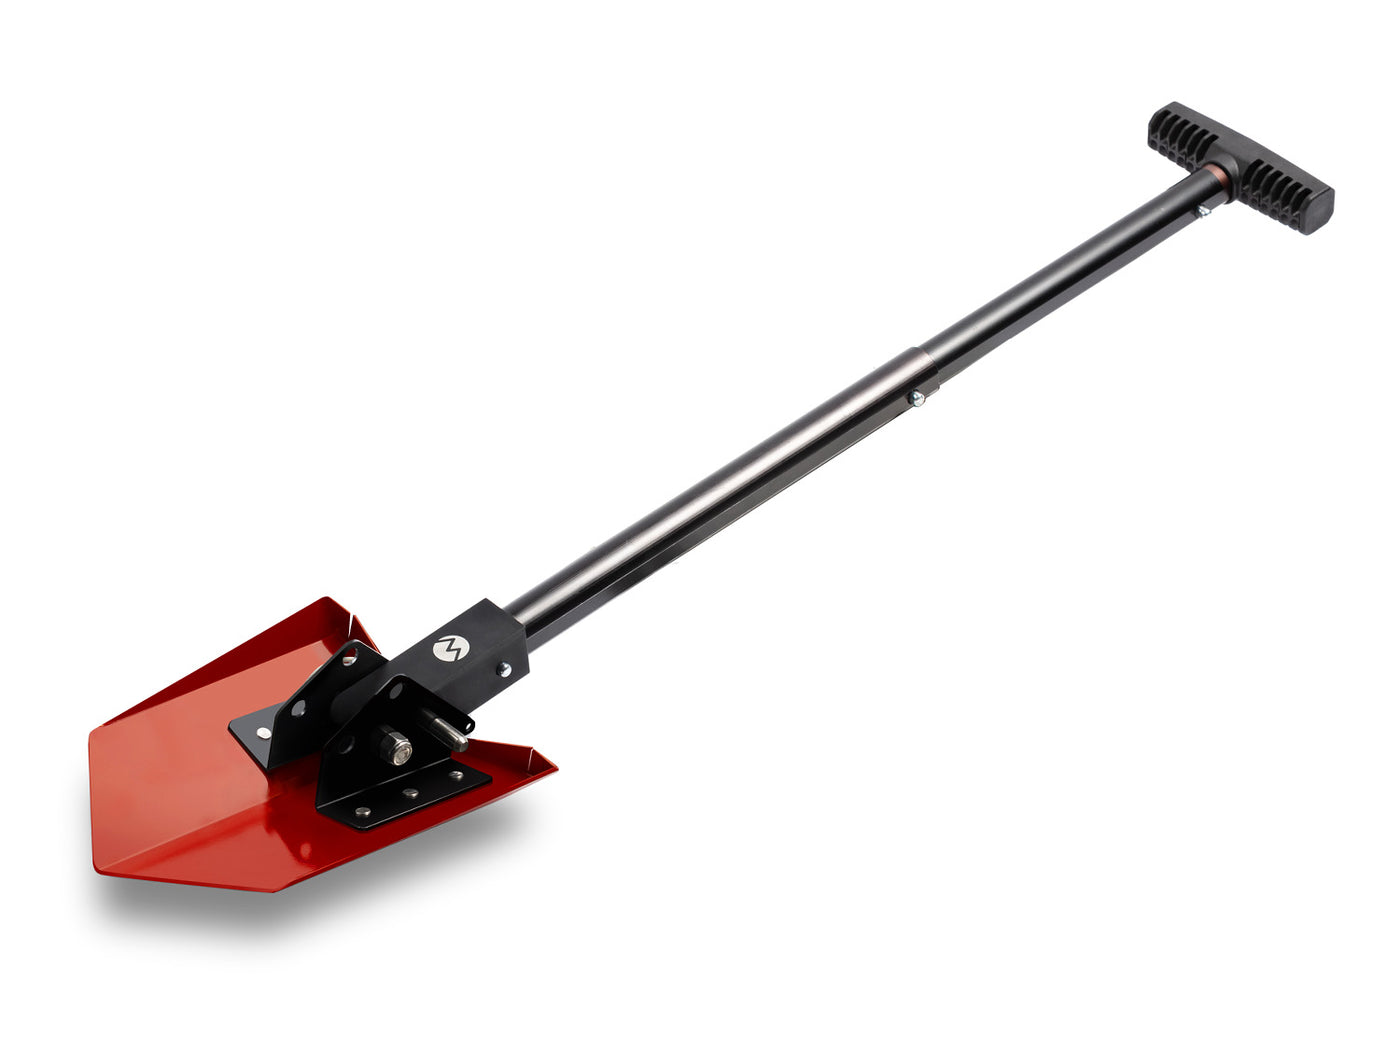 Compact Delta Shovel